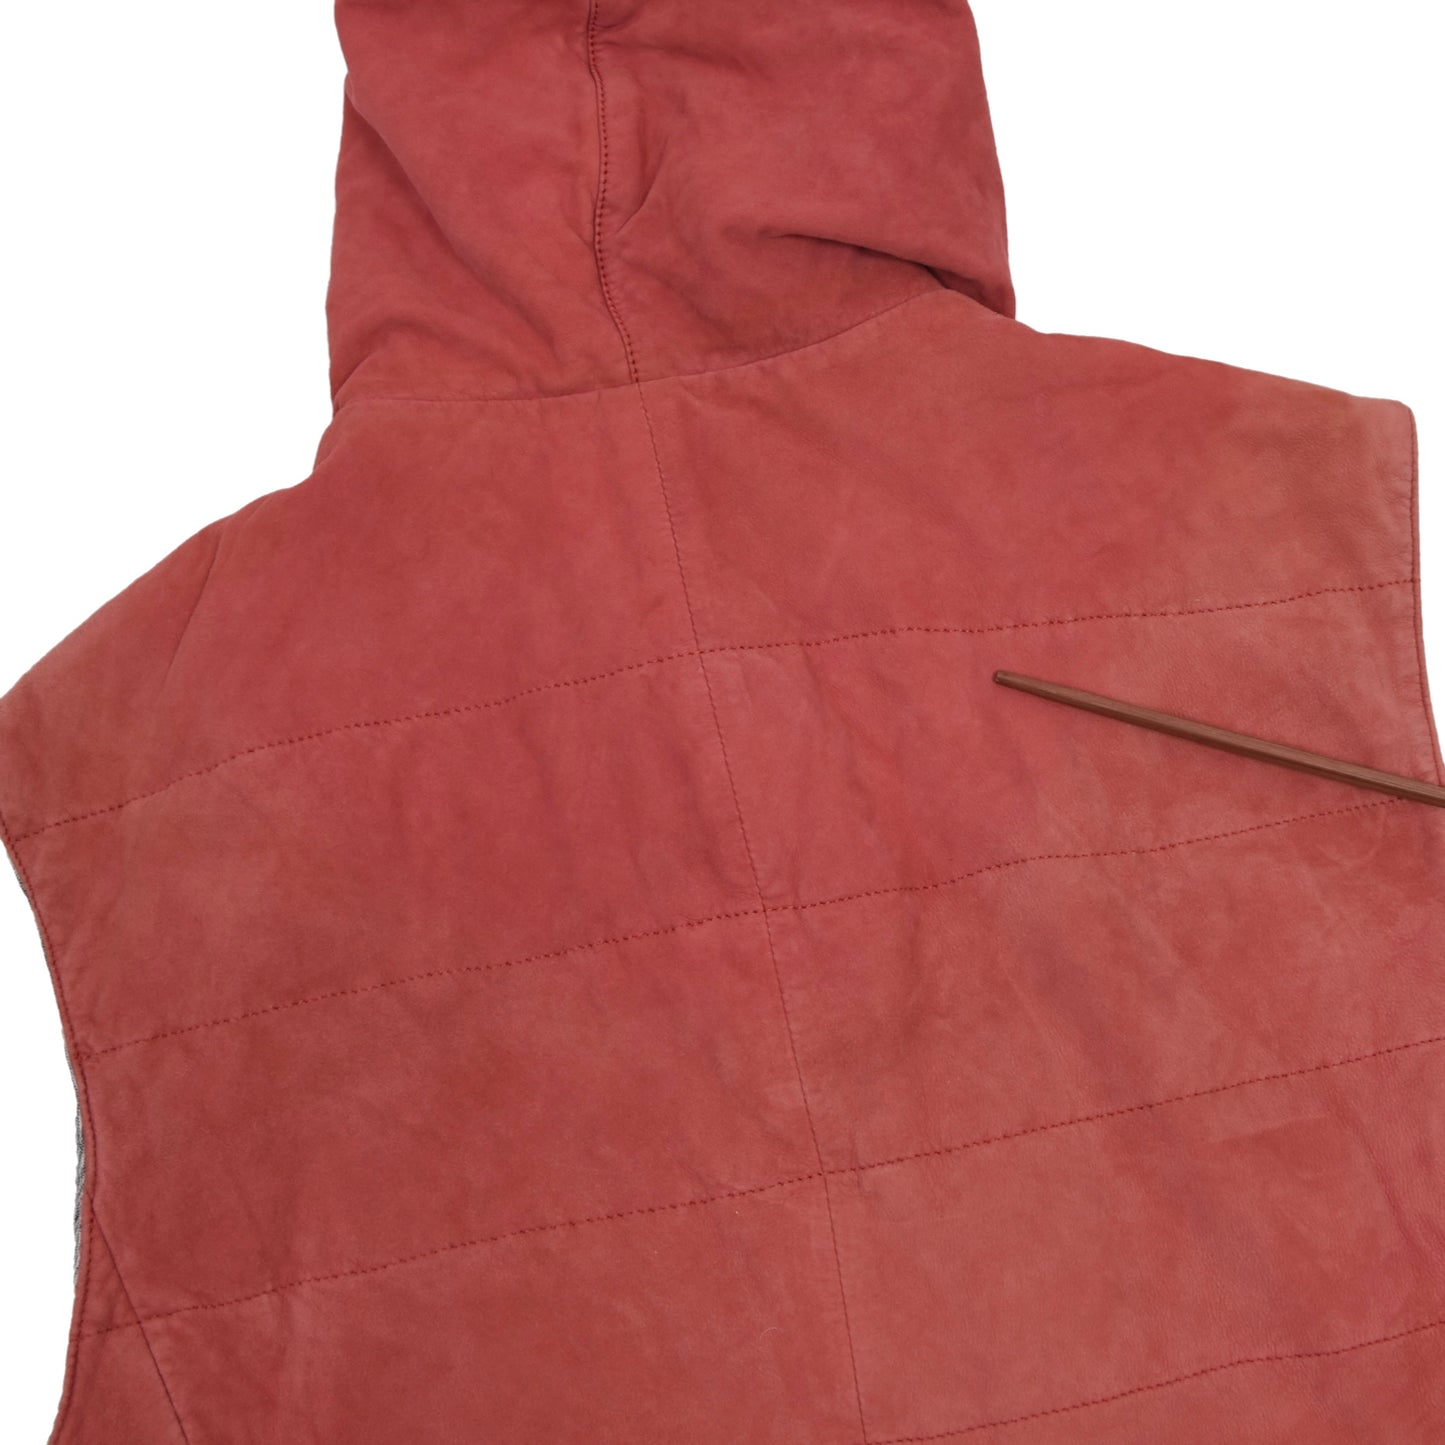 Gemelli Turzi Suede Leather Vest/Hoodie Size 58 - Pink/Red-Orange